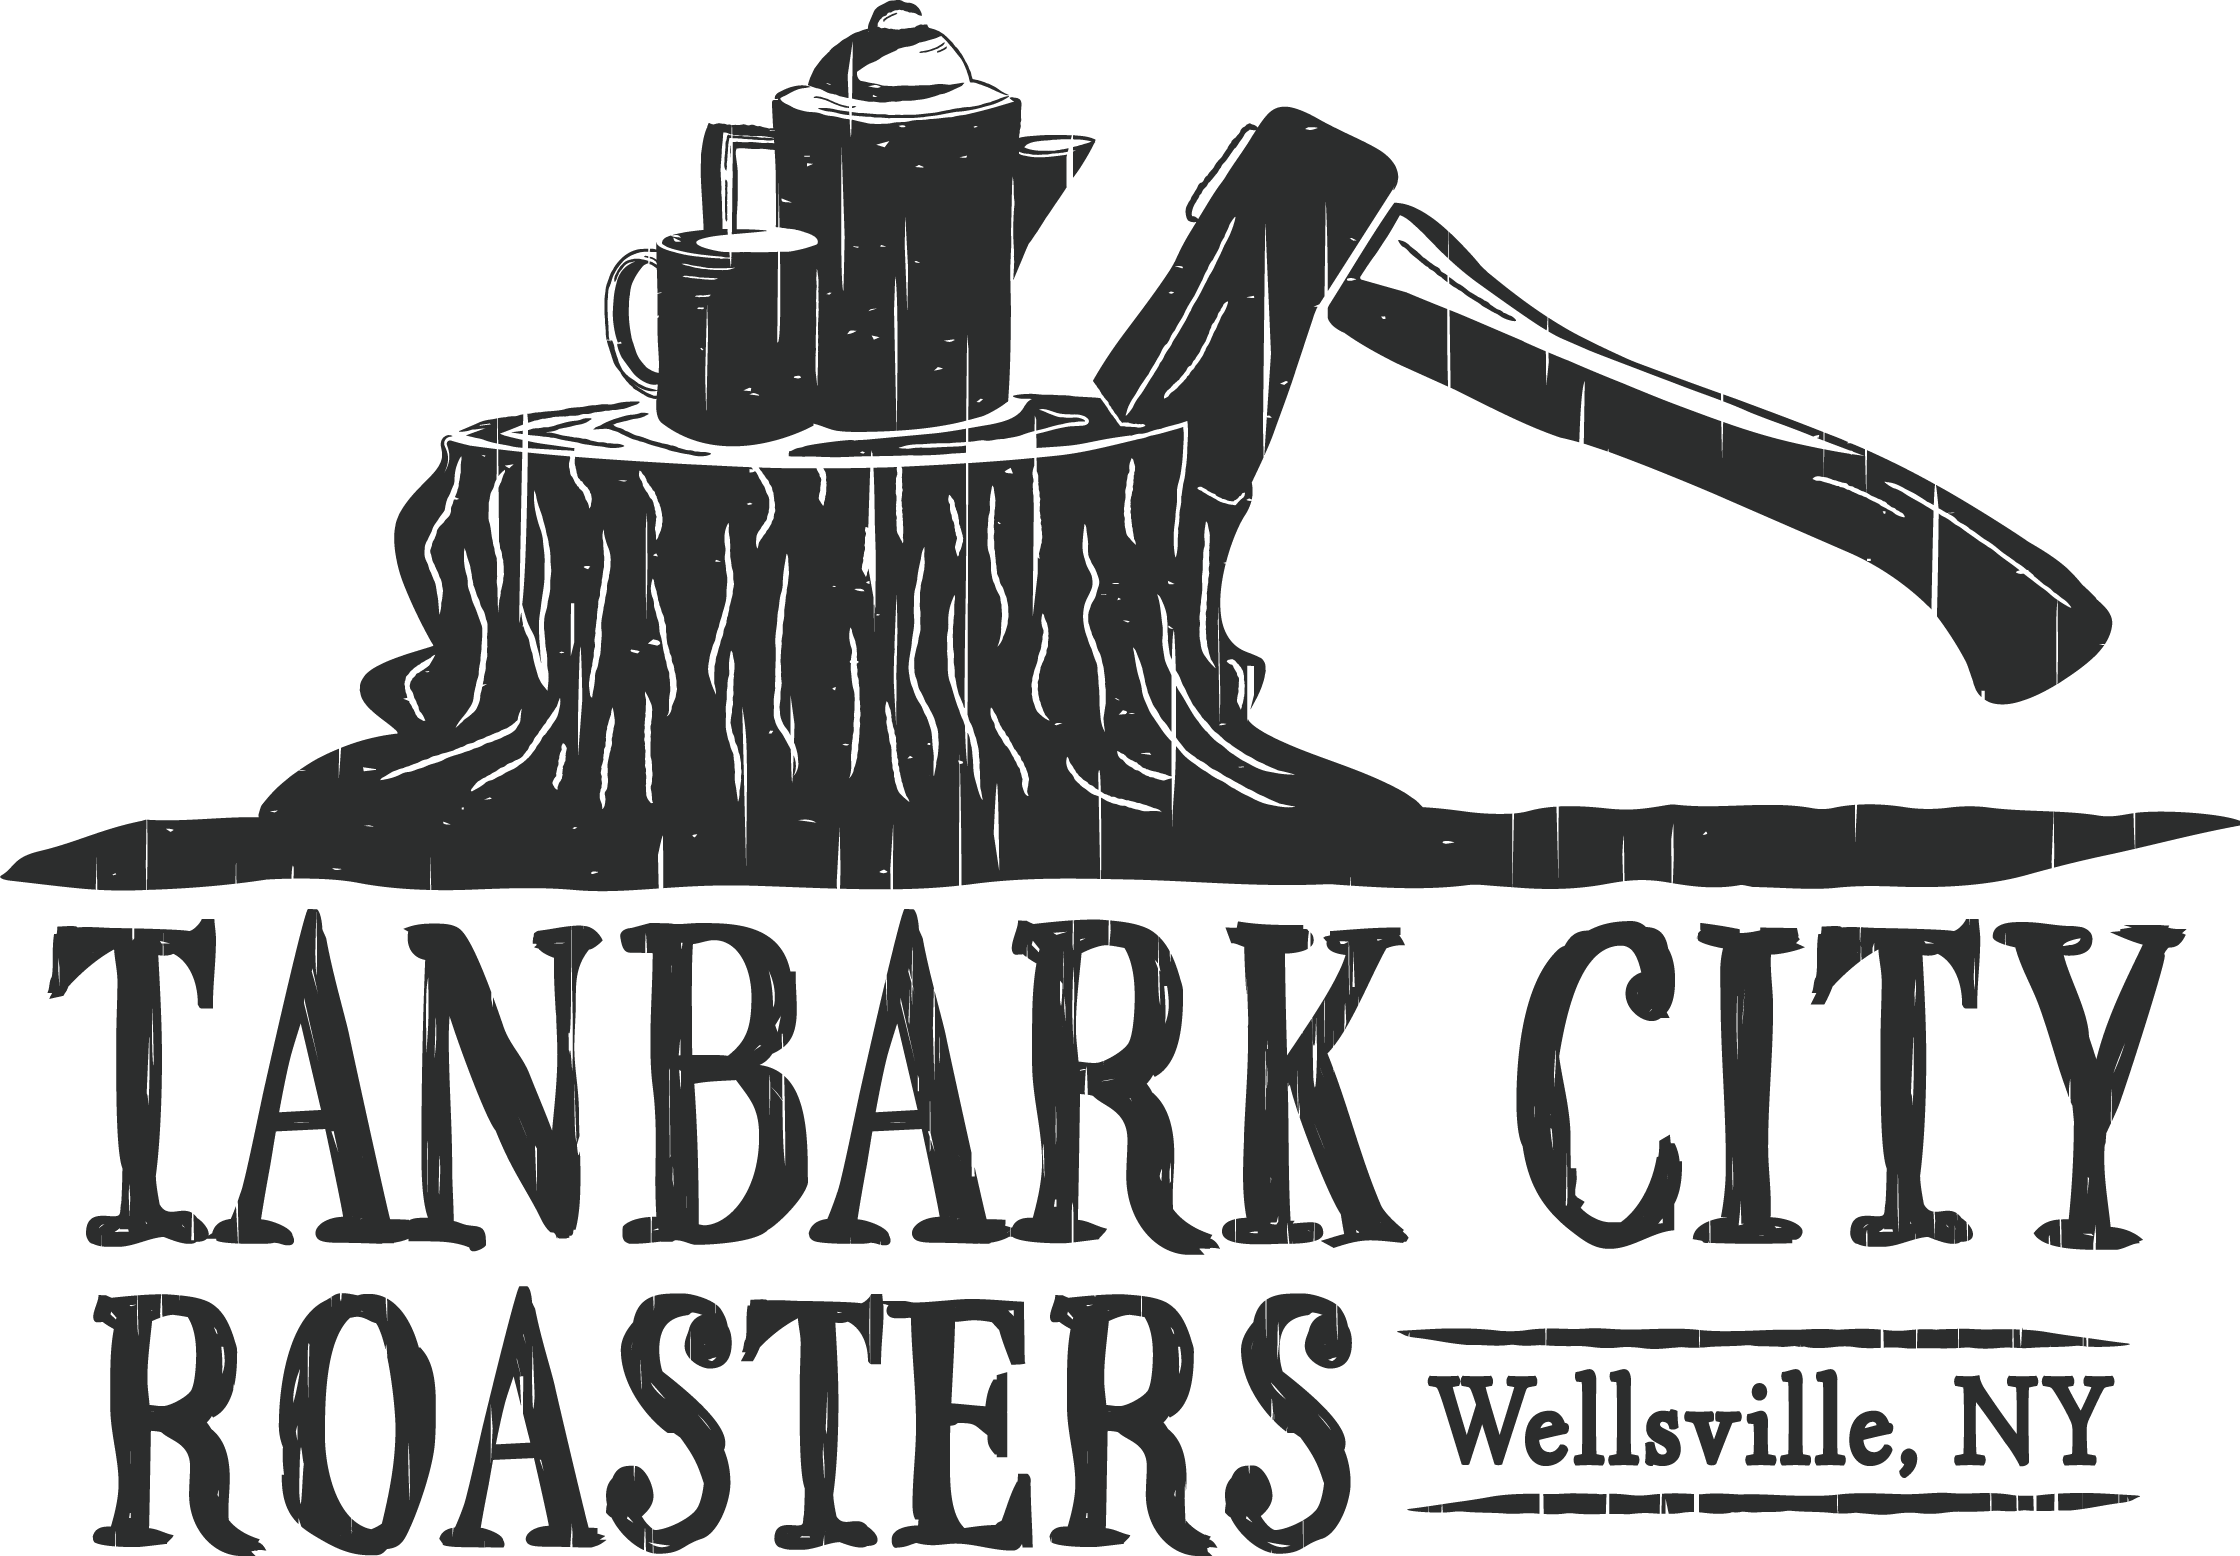 Tanbark City Roasters